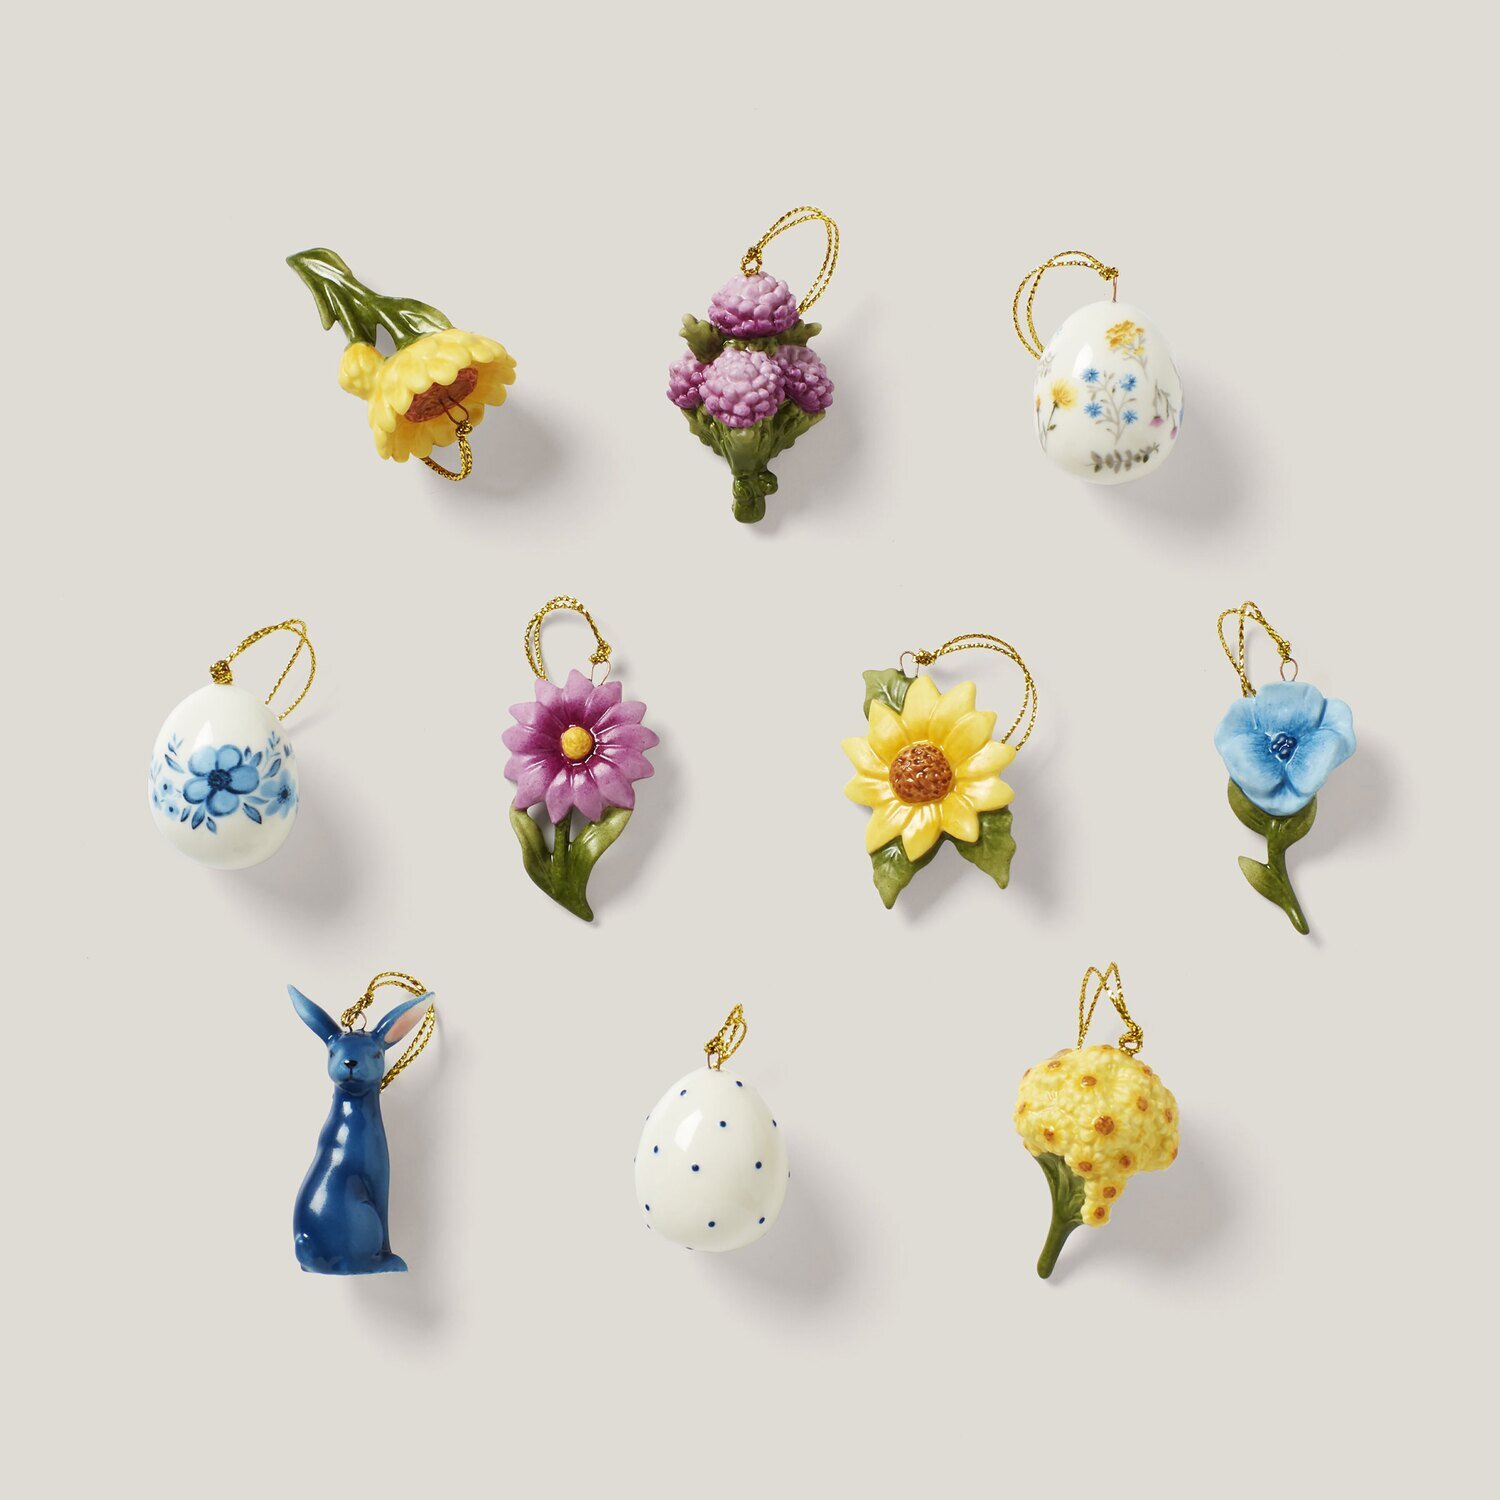 Lenox Ornament Sets Floral Easter10-Piece Ornament Set 893393